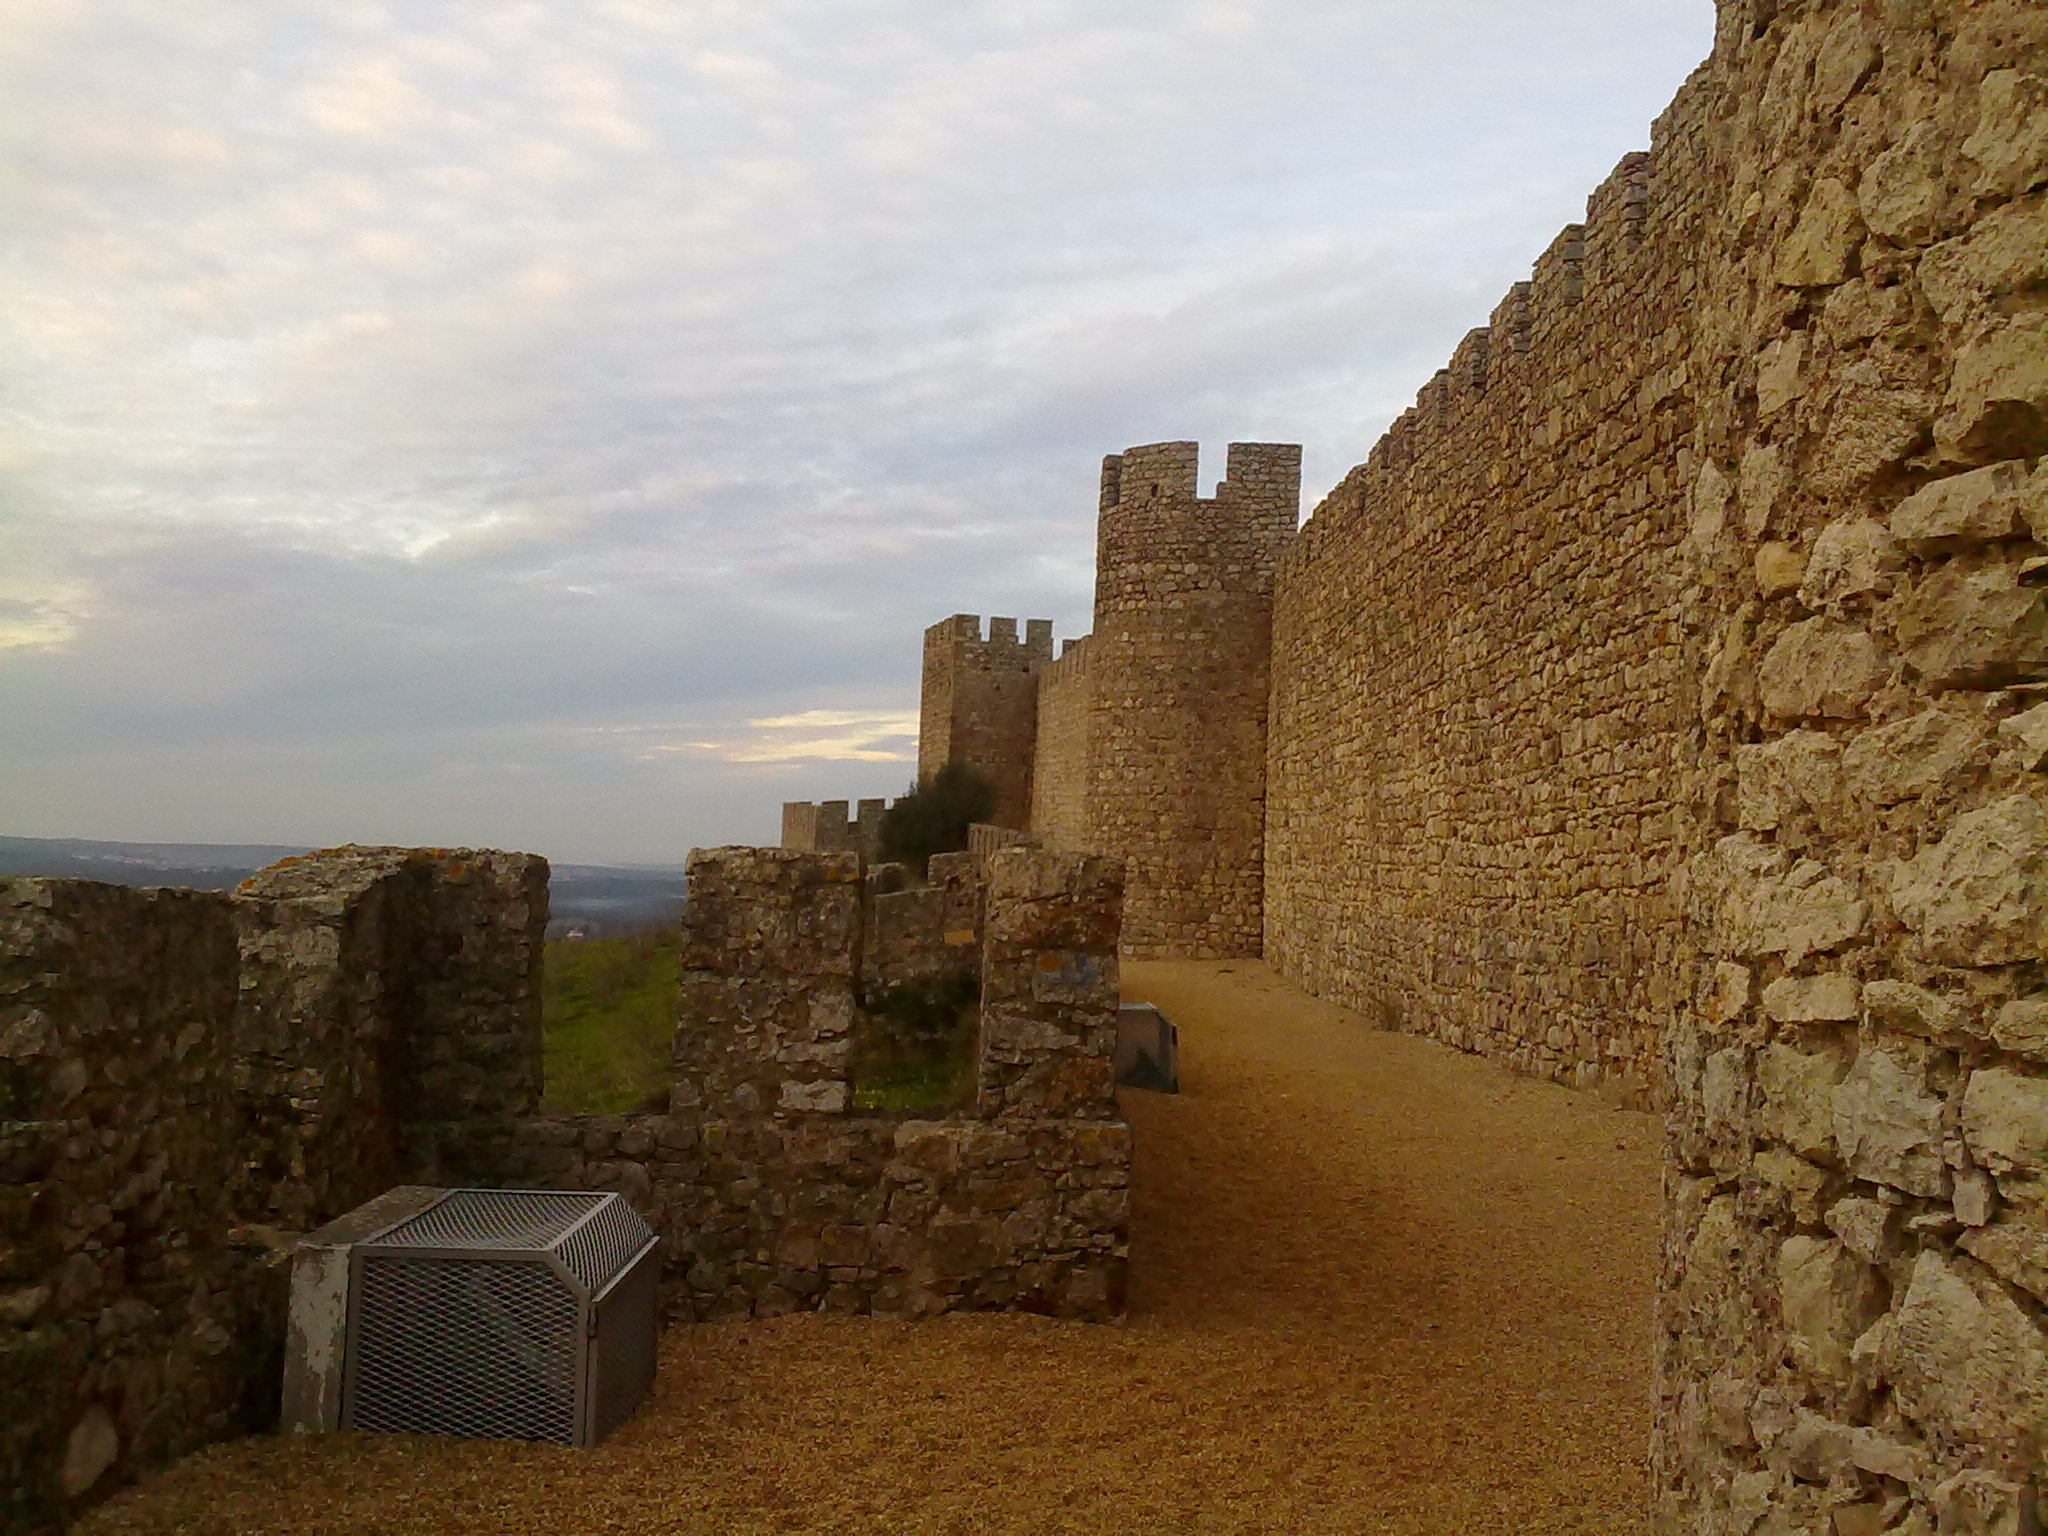 File:Castelo de Santiago do Cacém - aspectos.jpg - Wikimedia Commons